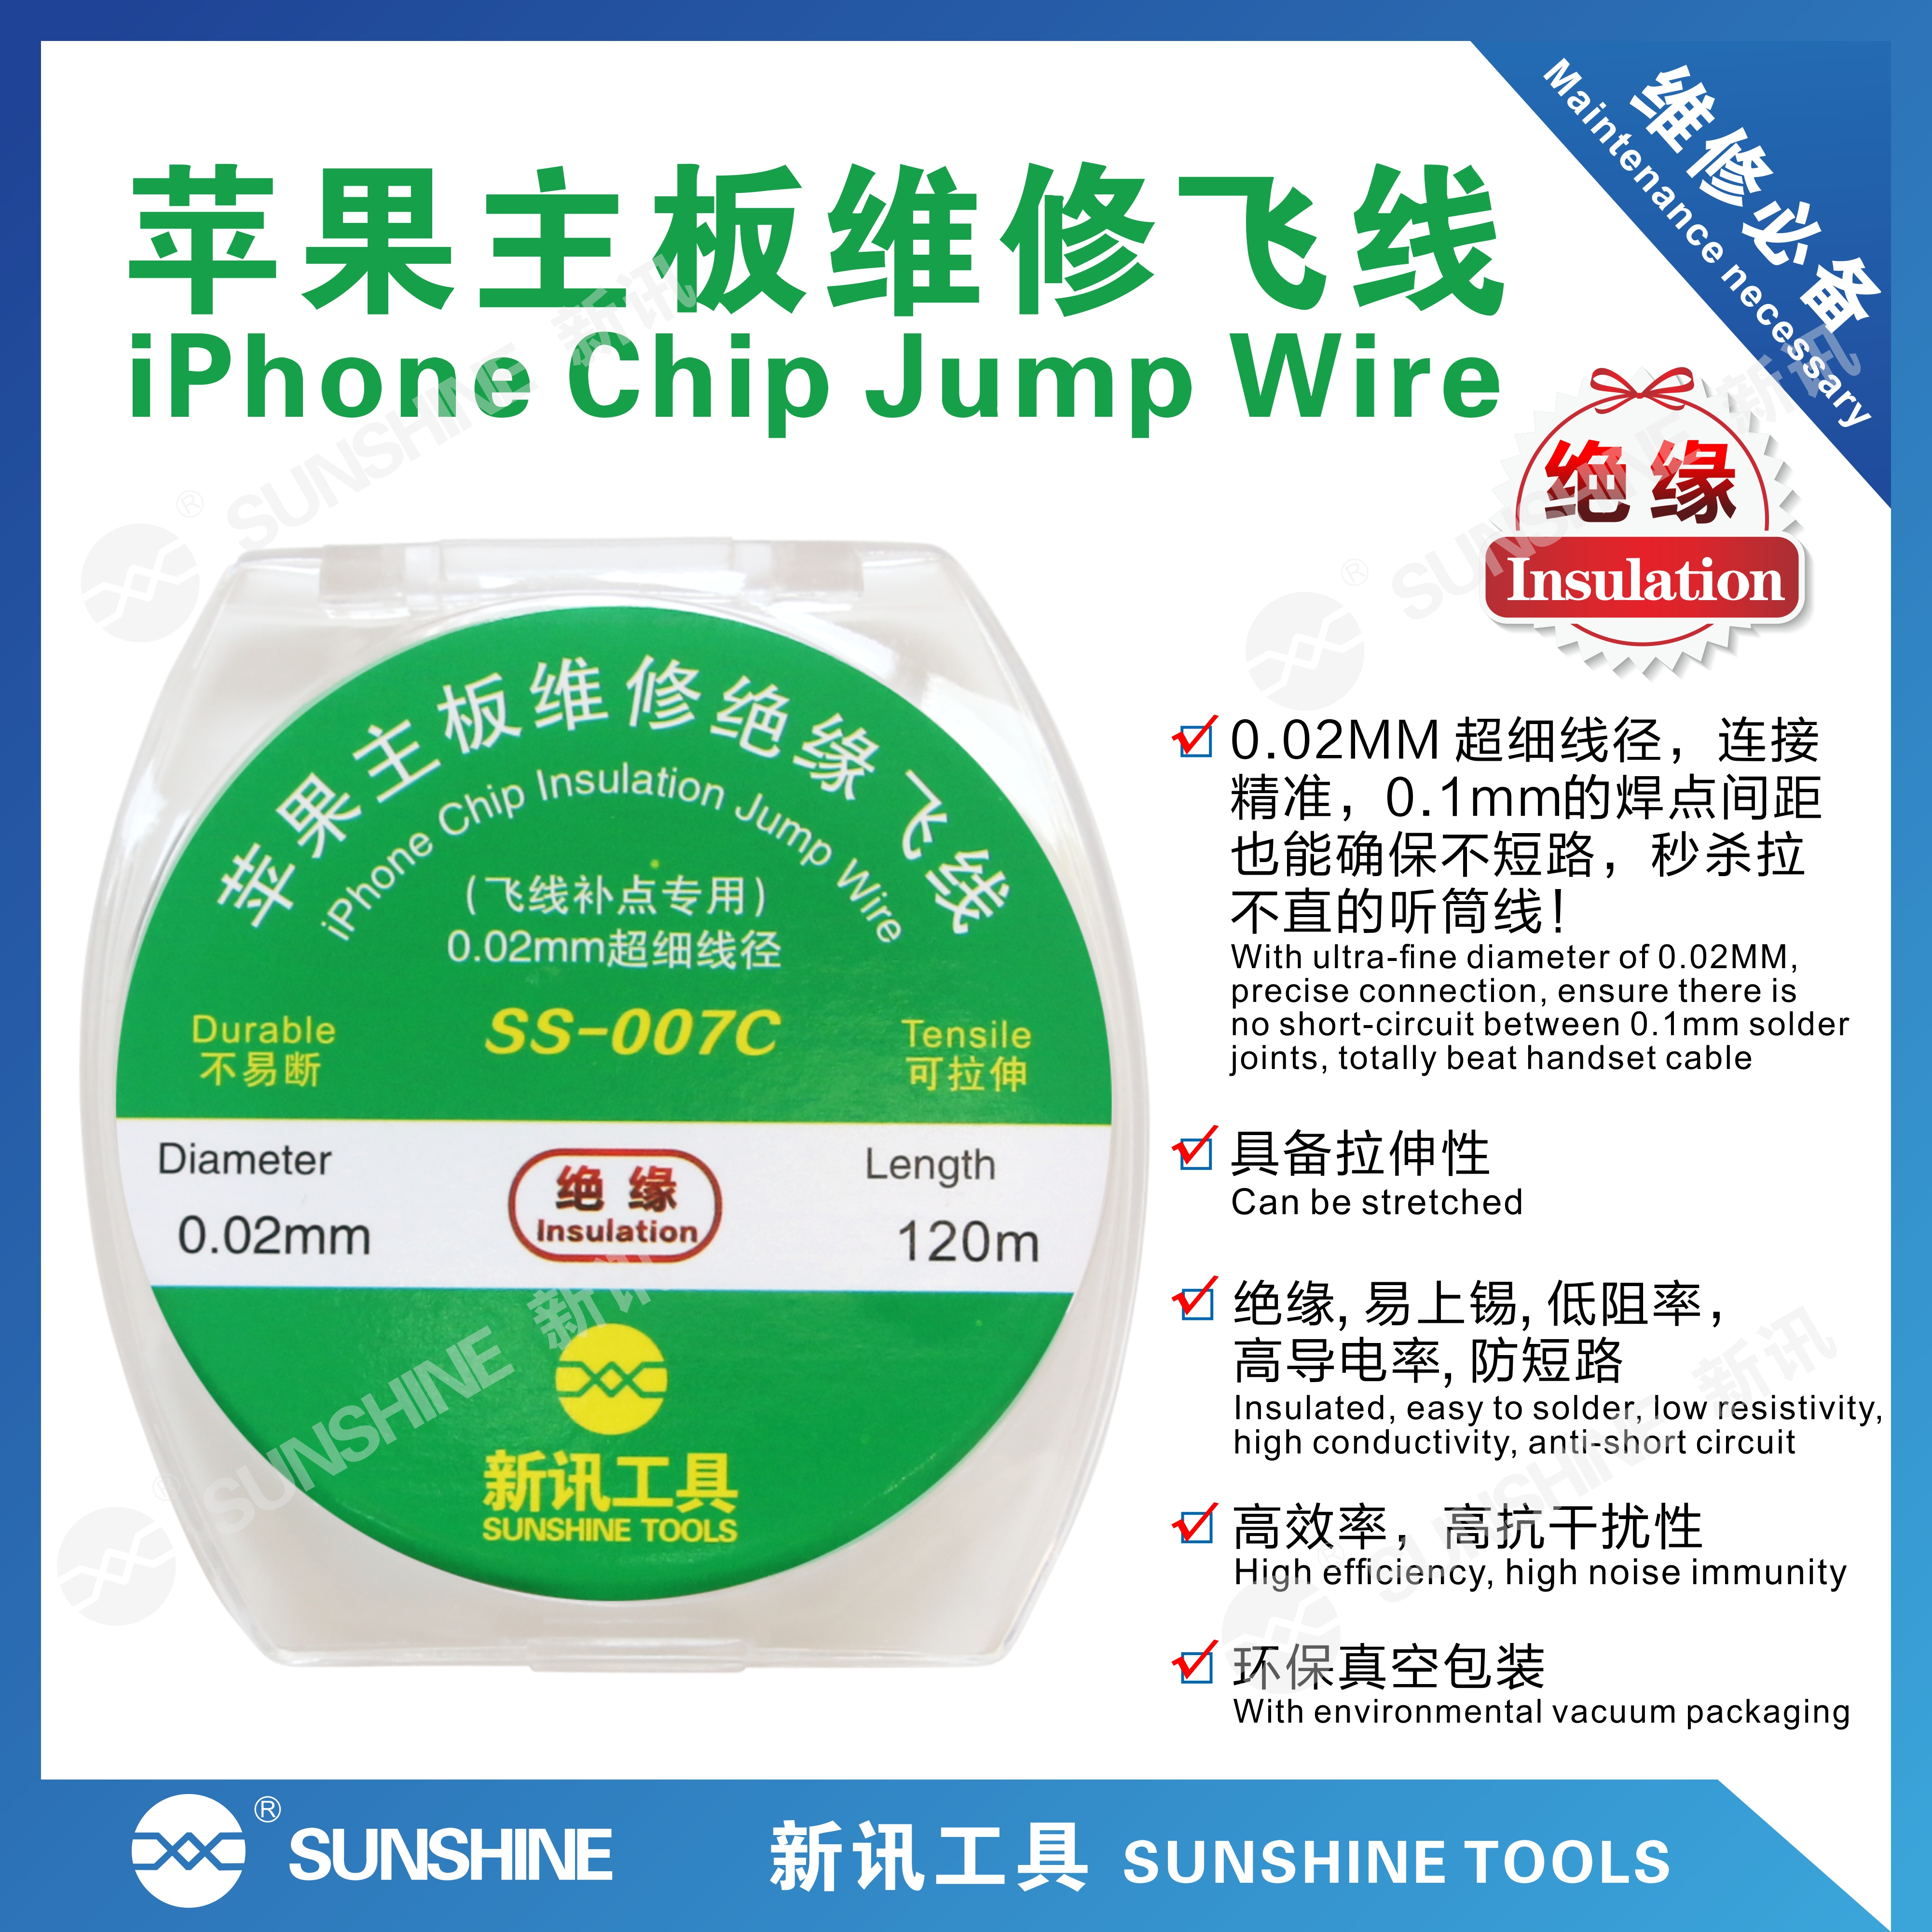 SUNSHINE SS-007C Iphone Pcb Insulated Repair Jump Wire/120M/0.02MM sunshine SS-007C Iphone Pcb Insulated Repair Jump Wire/120M/0.02MM